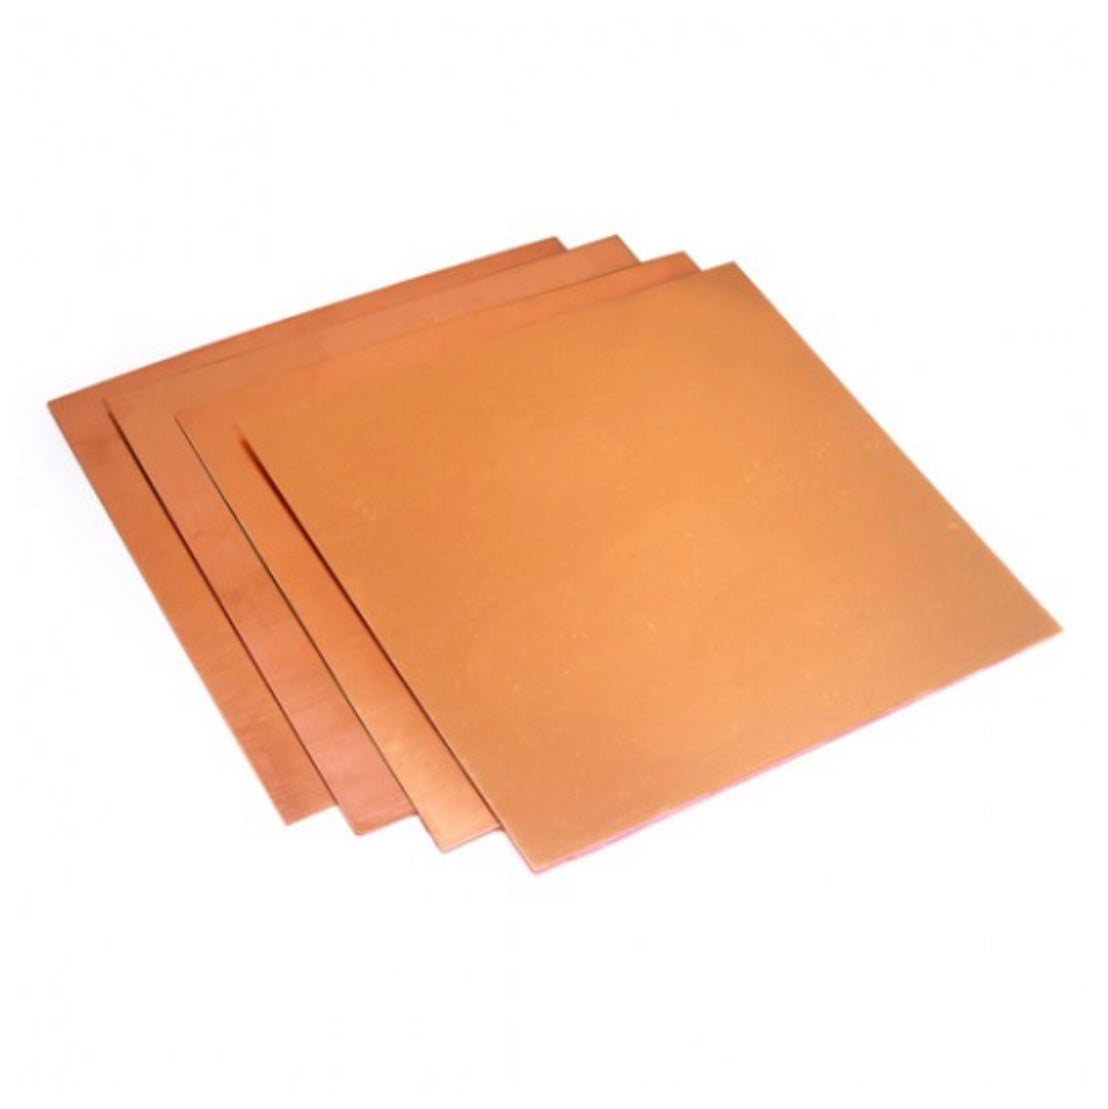 Shop Copper Sheets - Purchase Per Sheet